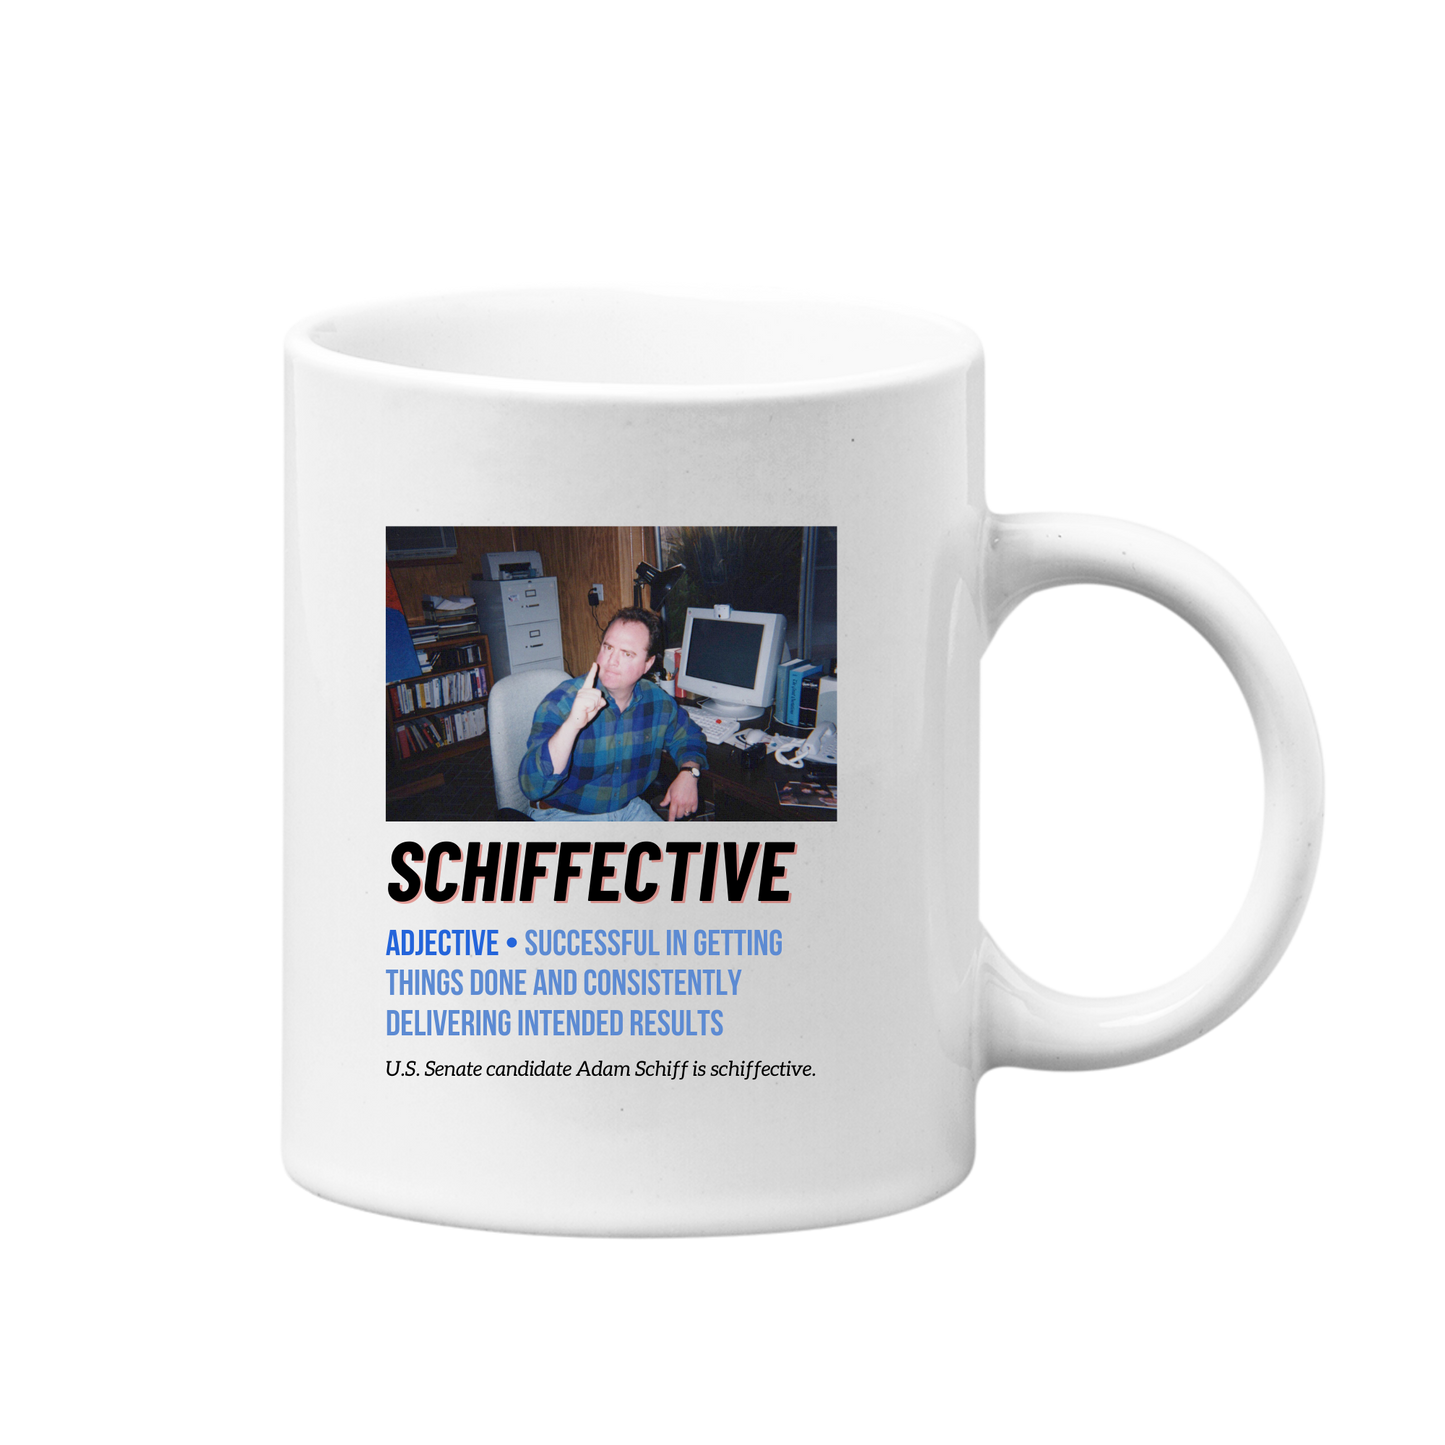 Schiffective Definition Mug